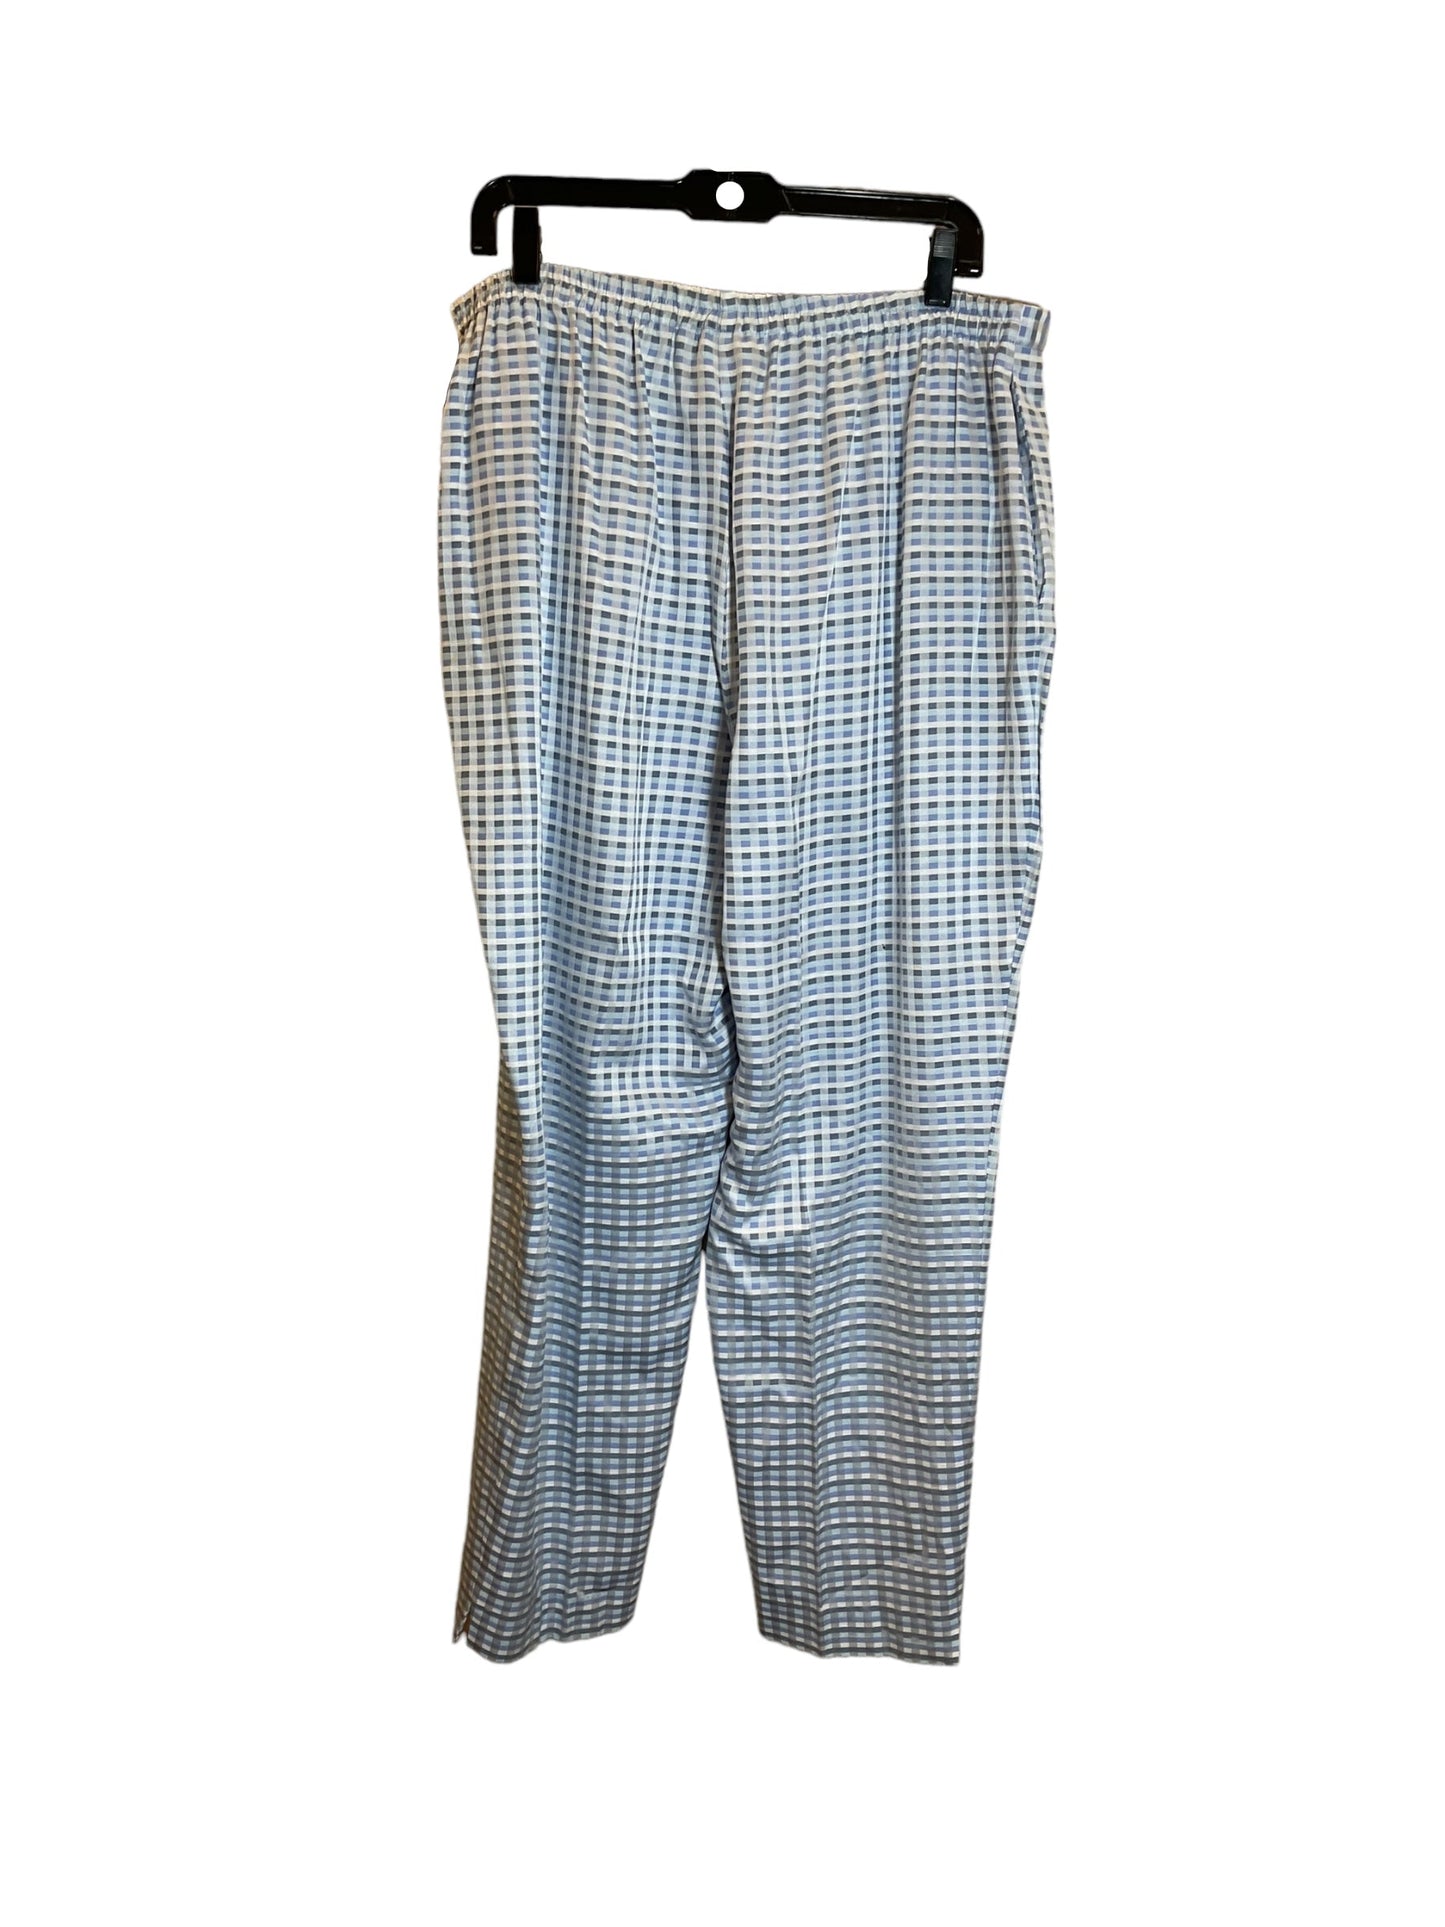 Pants Work/dress By Sag Harbor  Size: 12